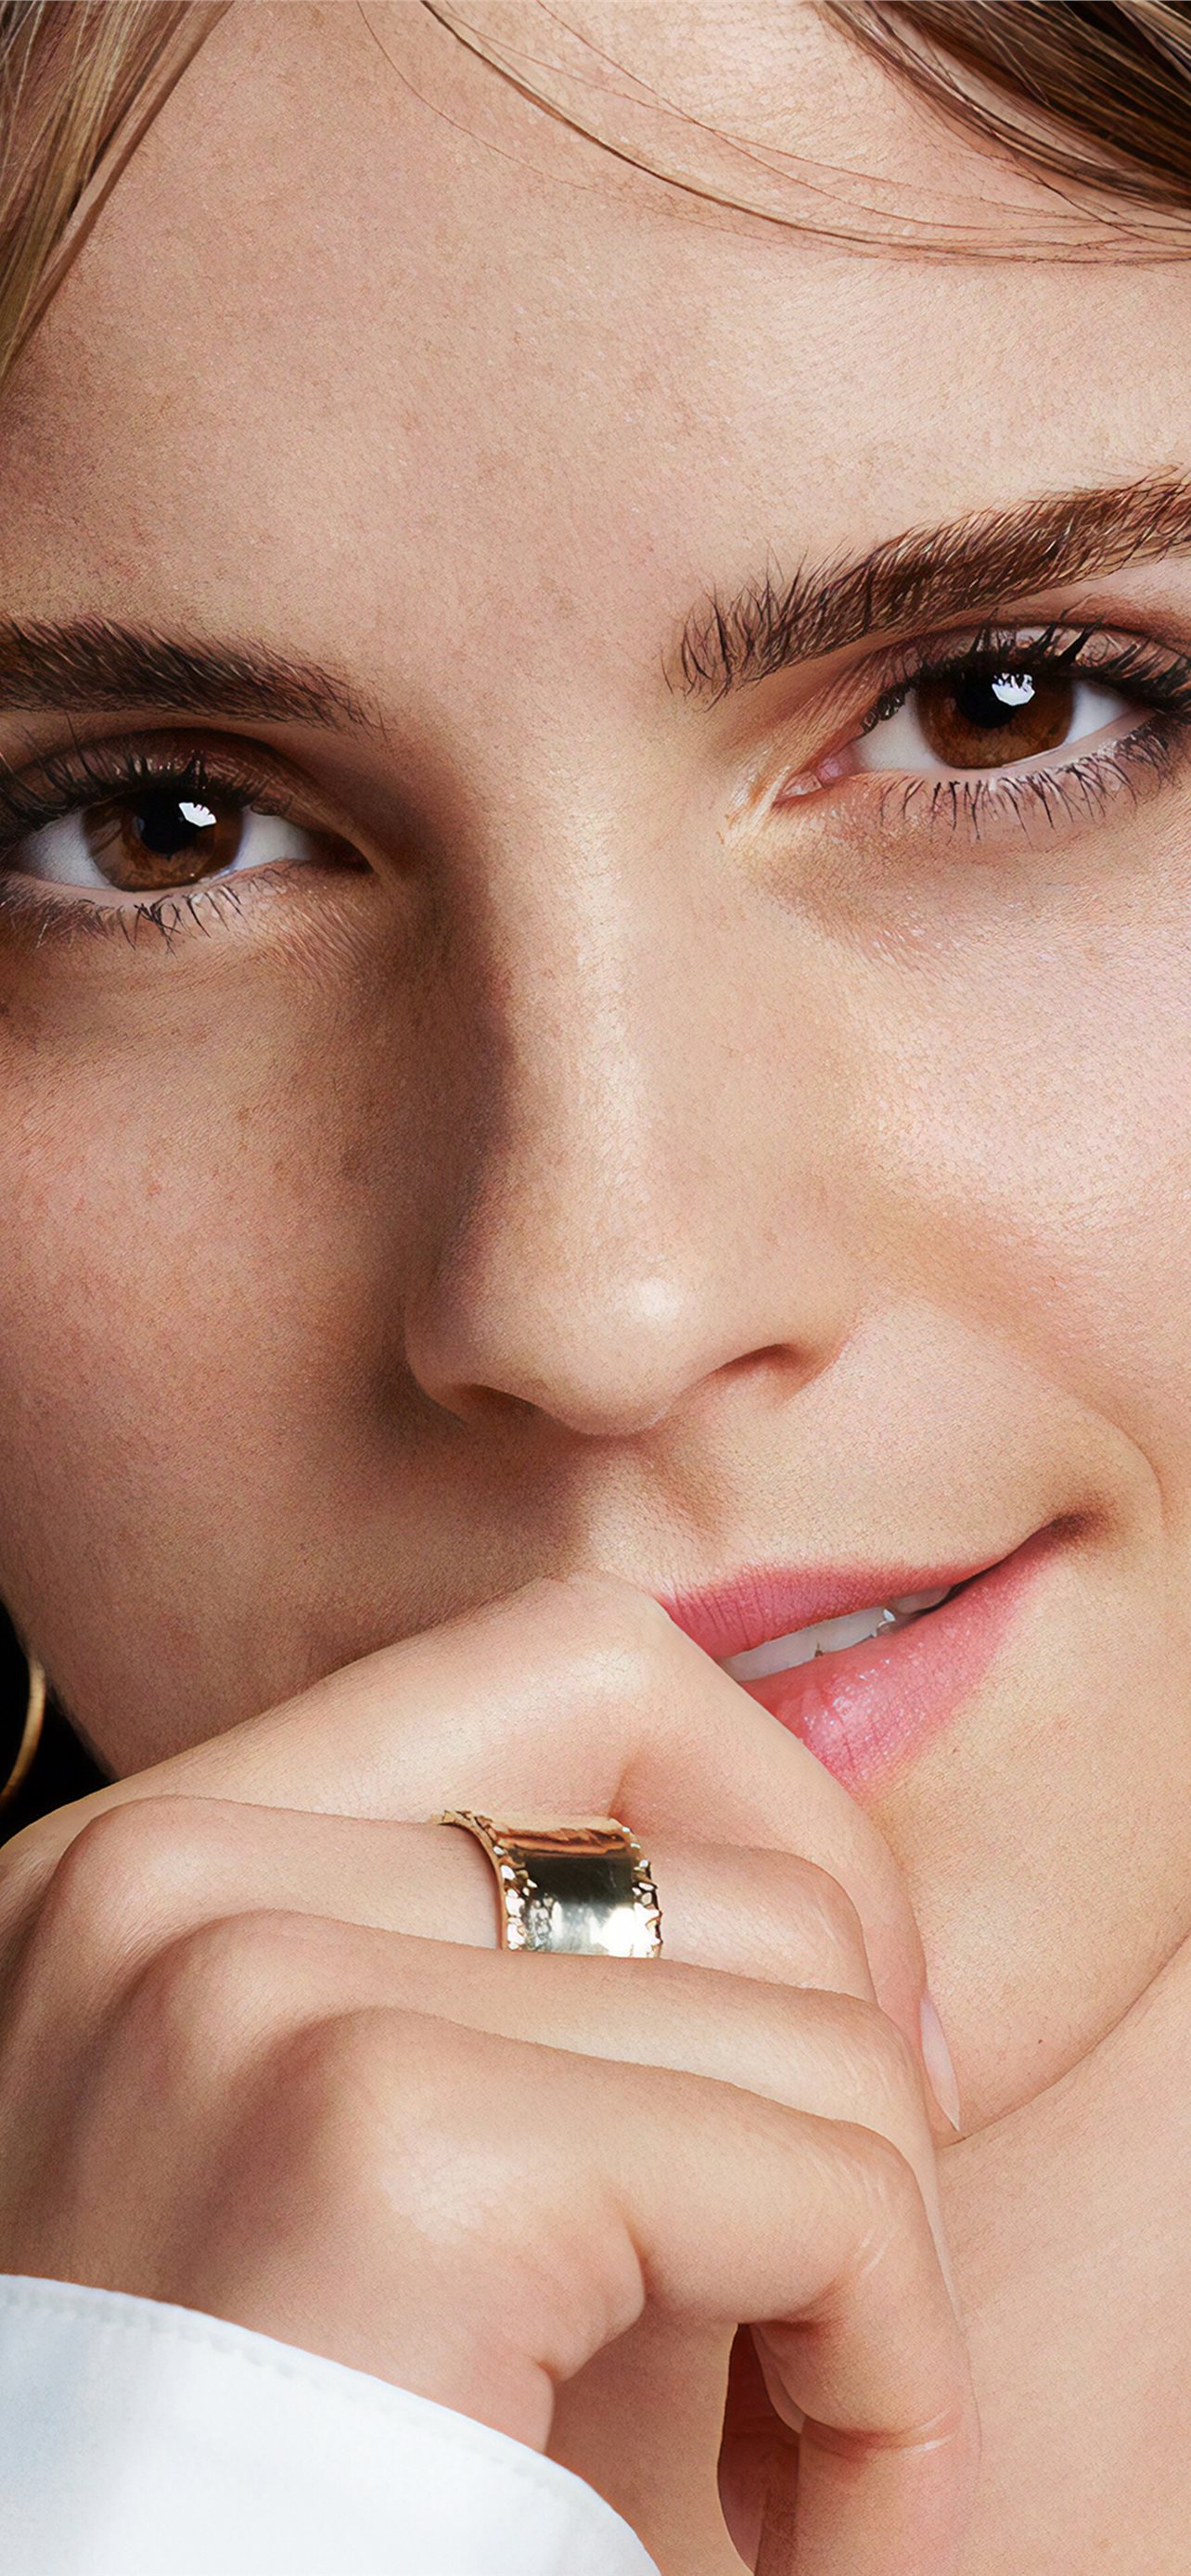 Emma Watson Stunning Look - Download Free HD Mobile Wallpapers